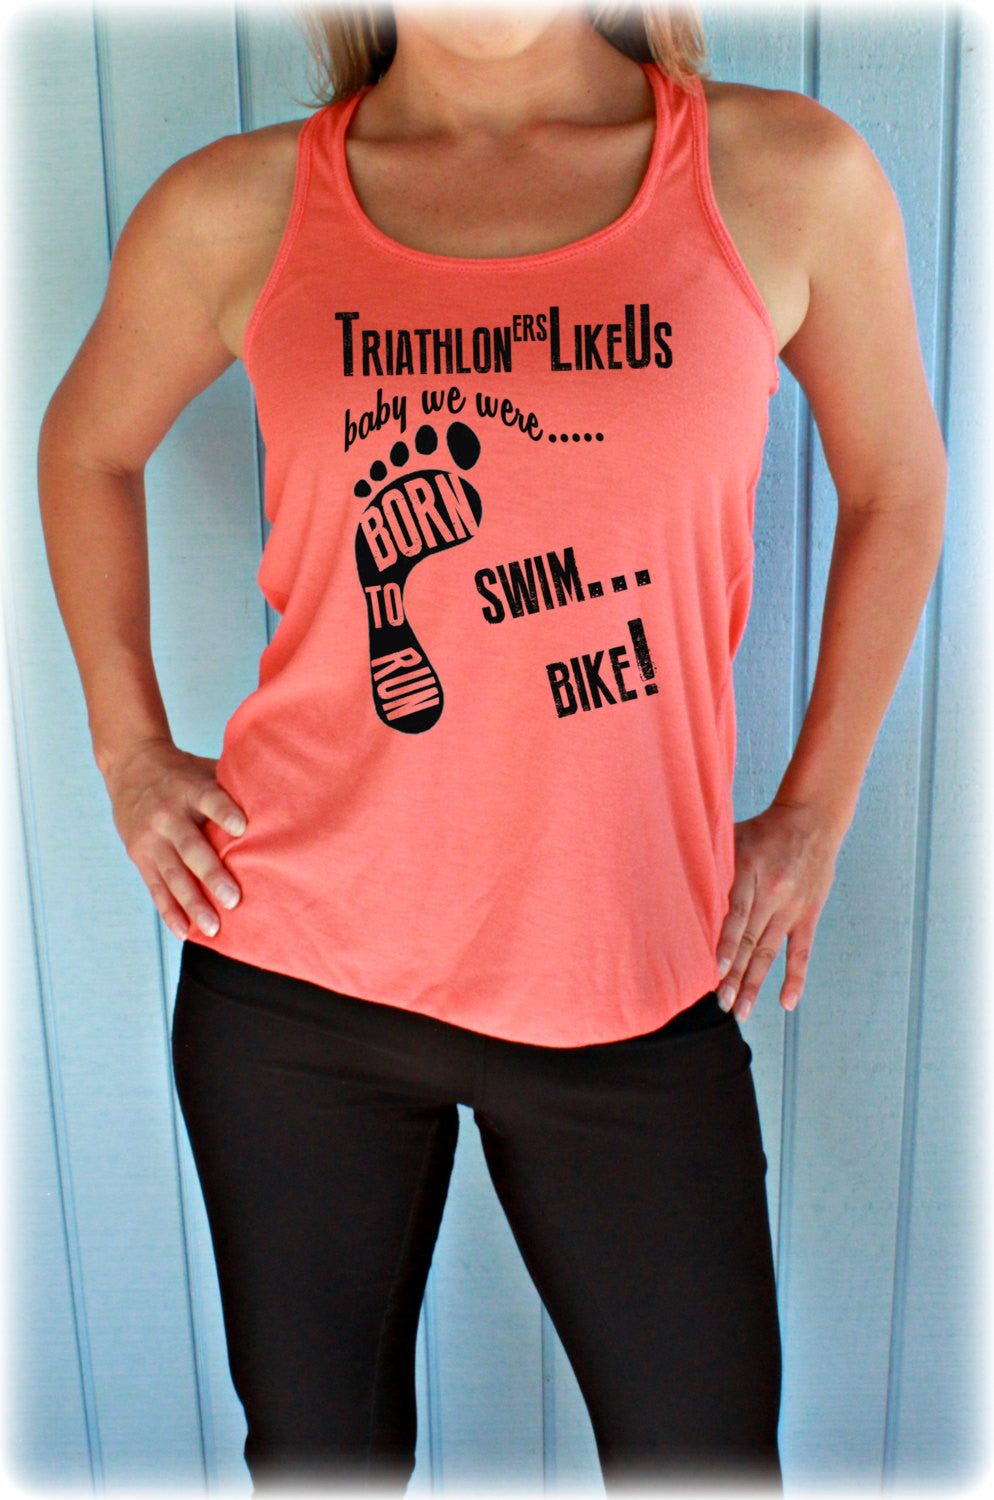 Triathlon Race Tank Top. Fitness Motivation. Triathloners Like Us. Womens Workout Clothing.